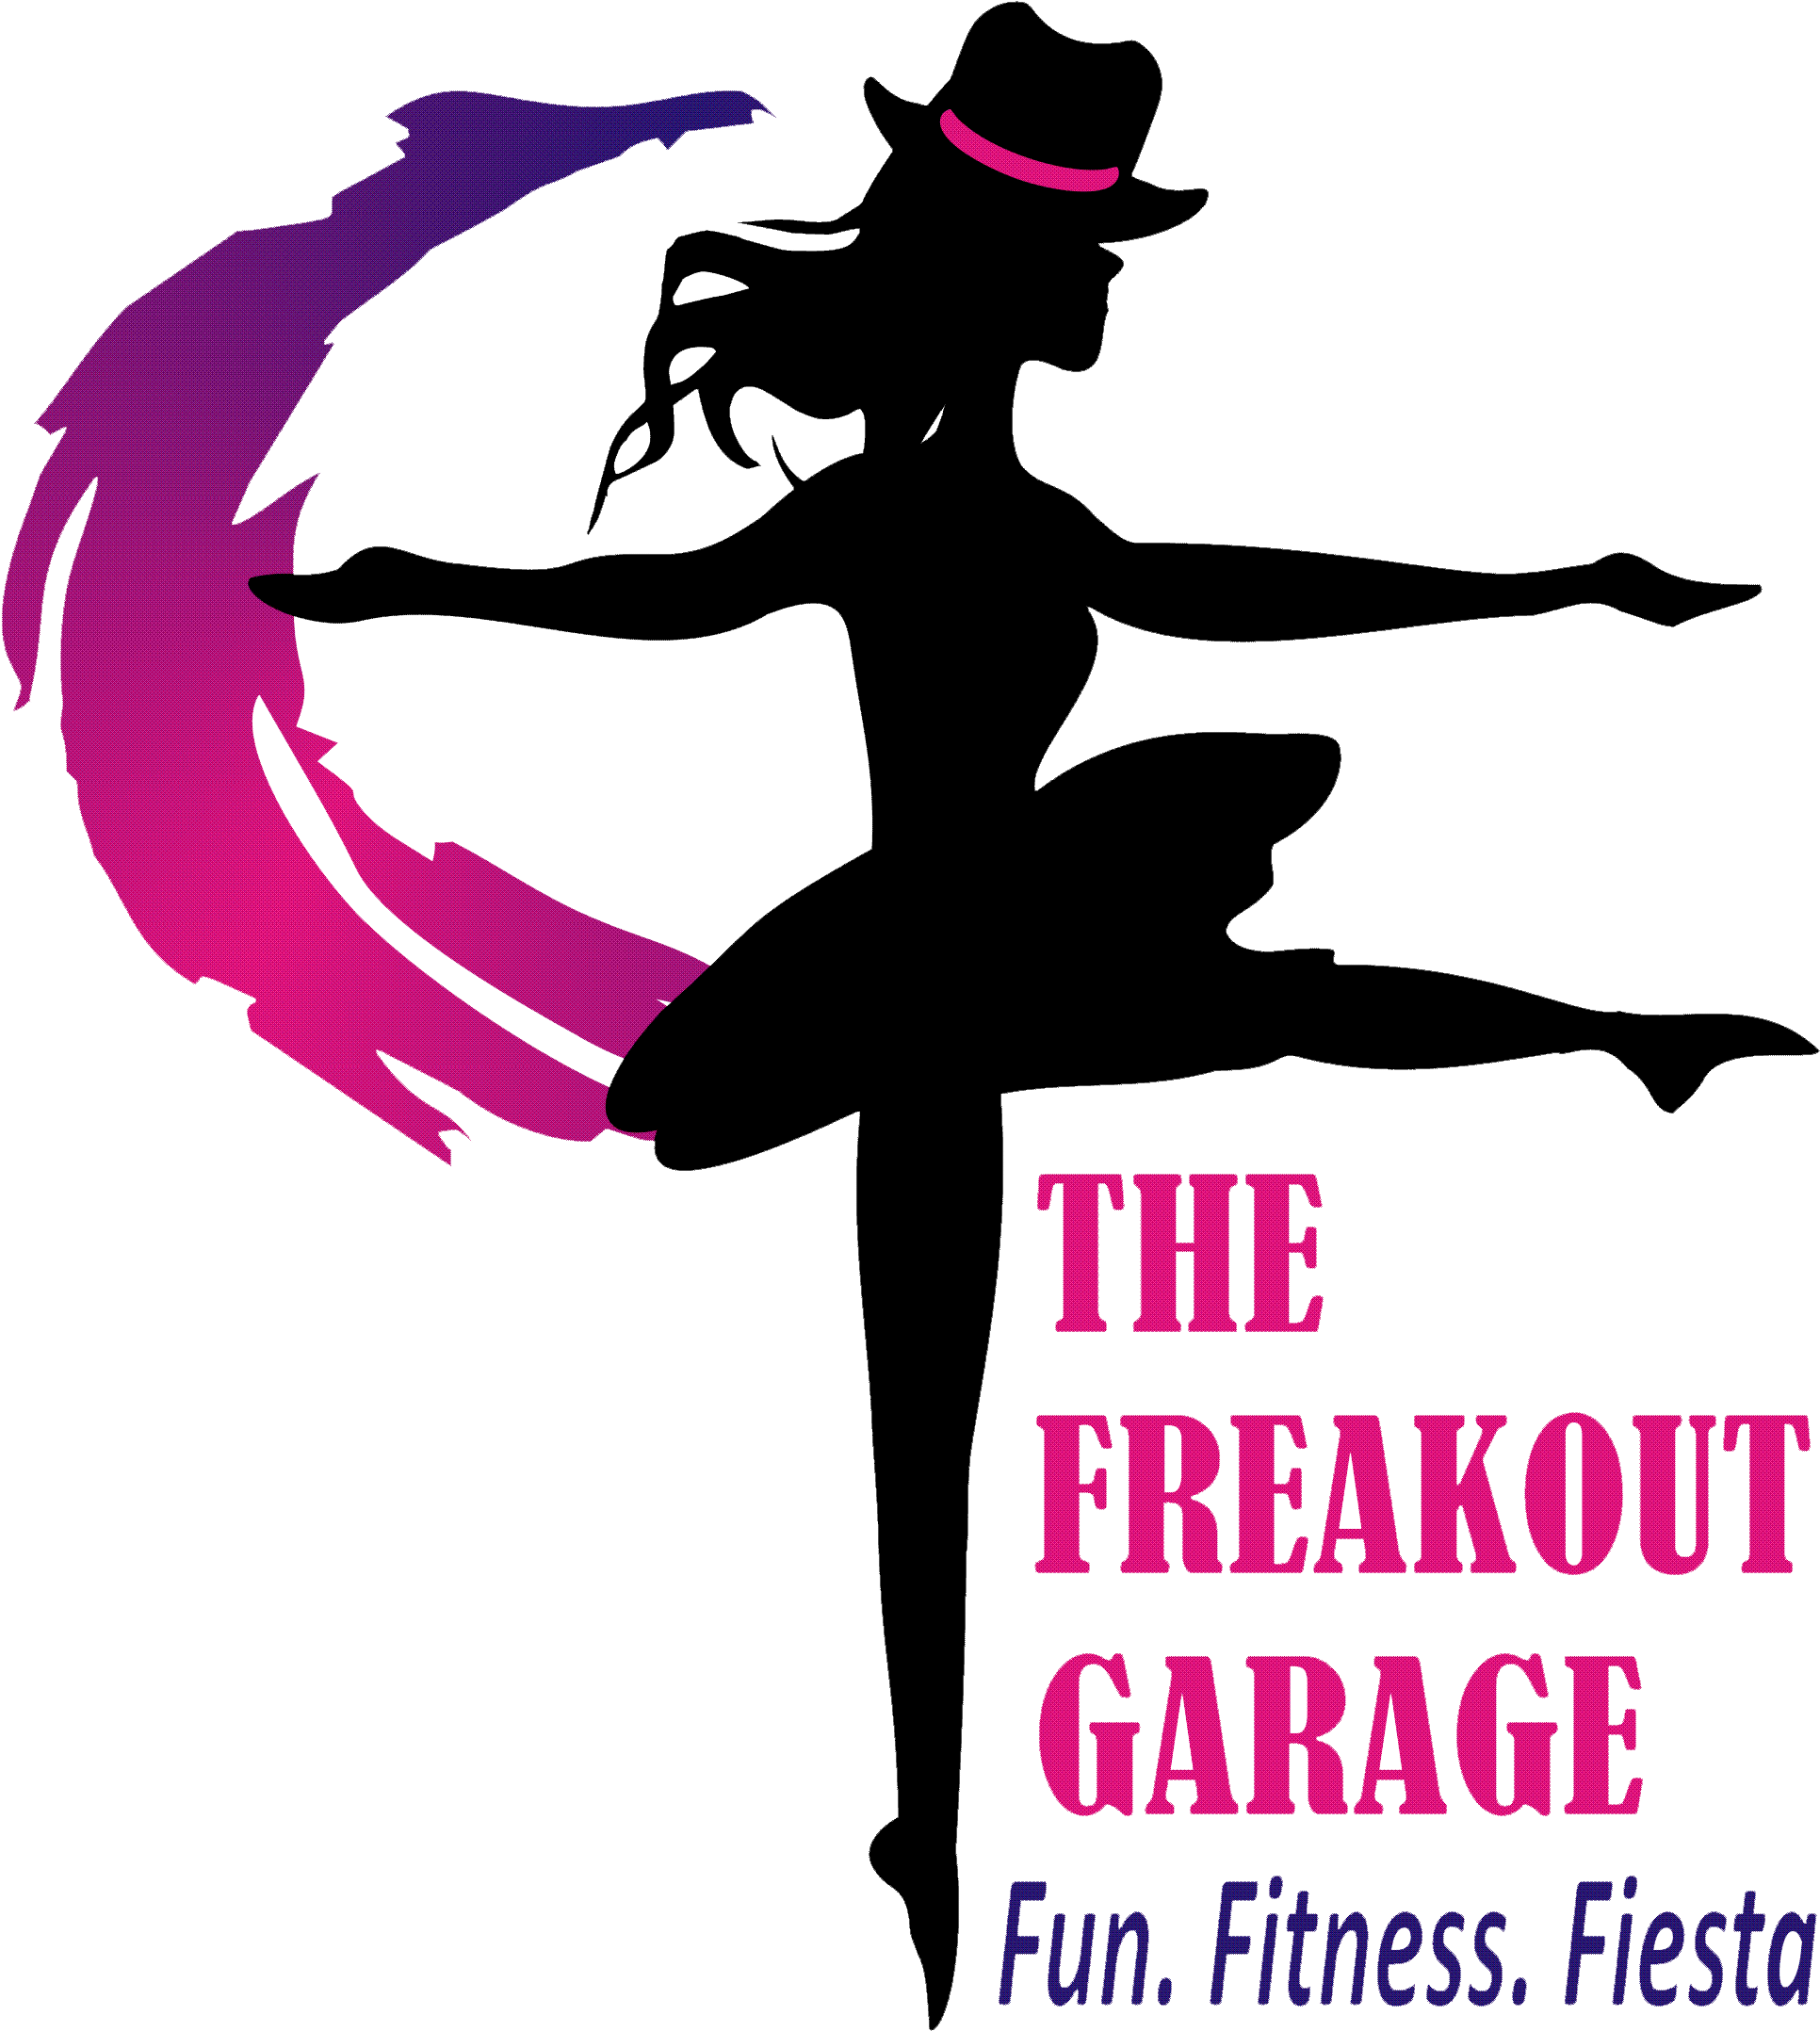 Richard Dcosta Best Dance & Fitness Studio In Mumbai - Freak Out Garage (2100x2220)